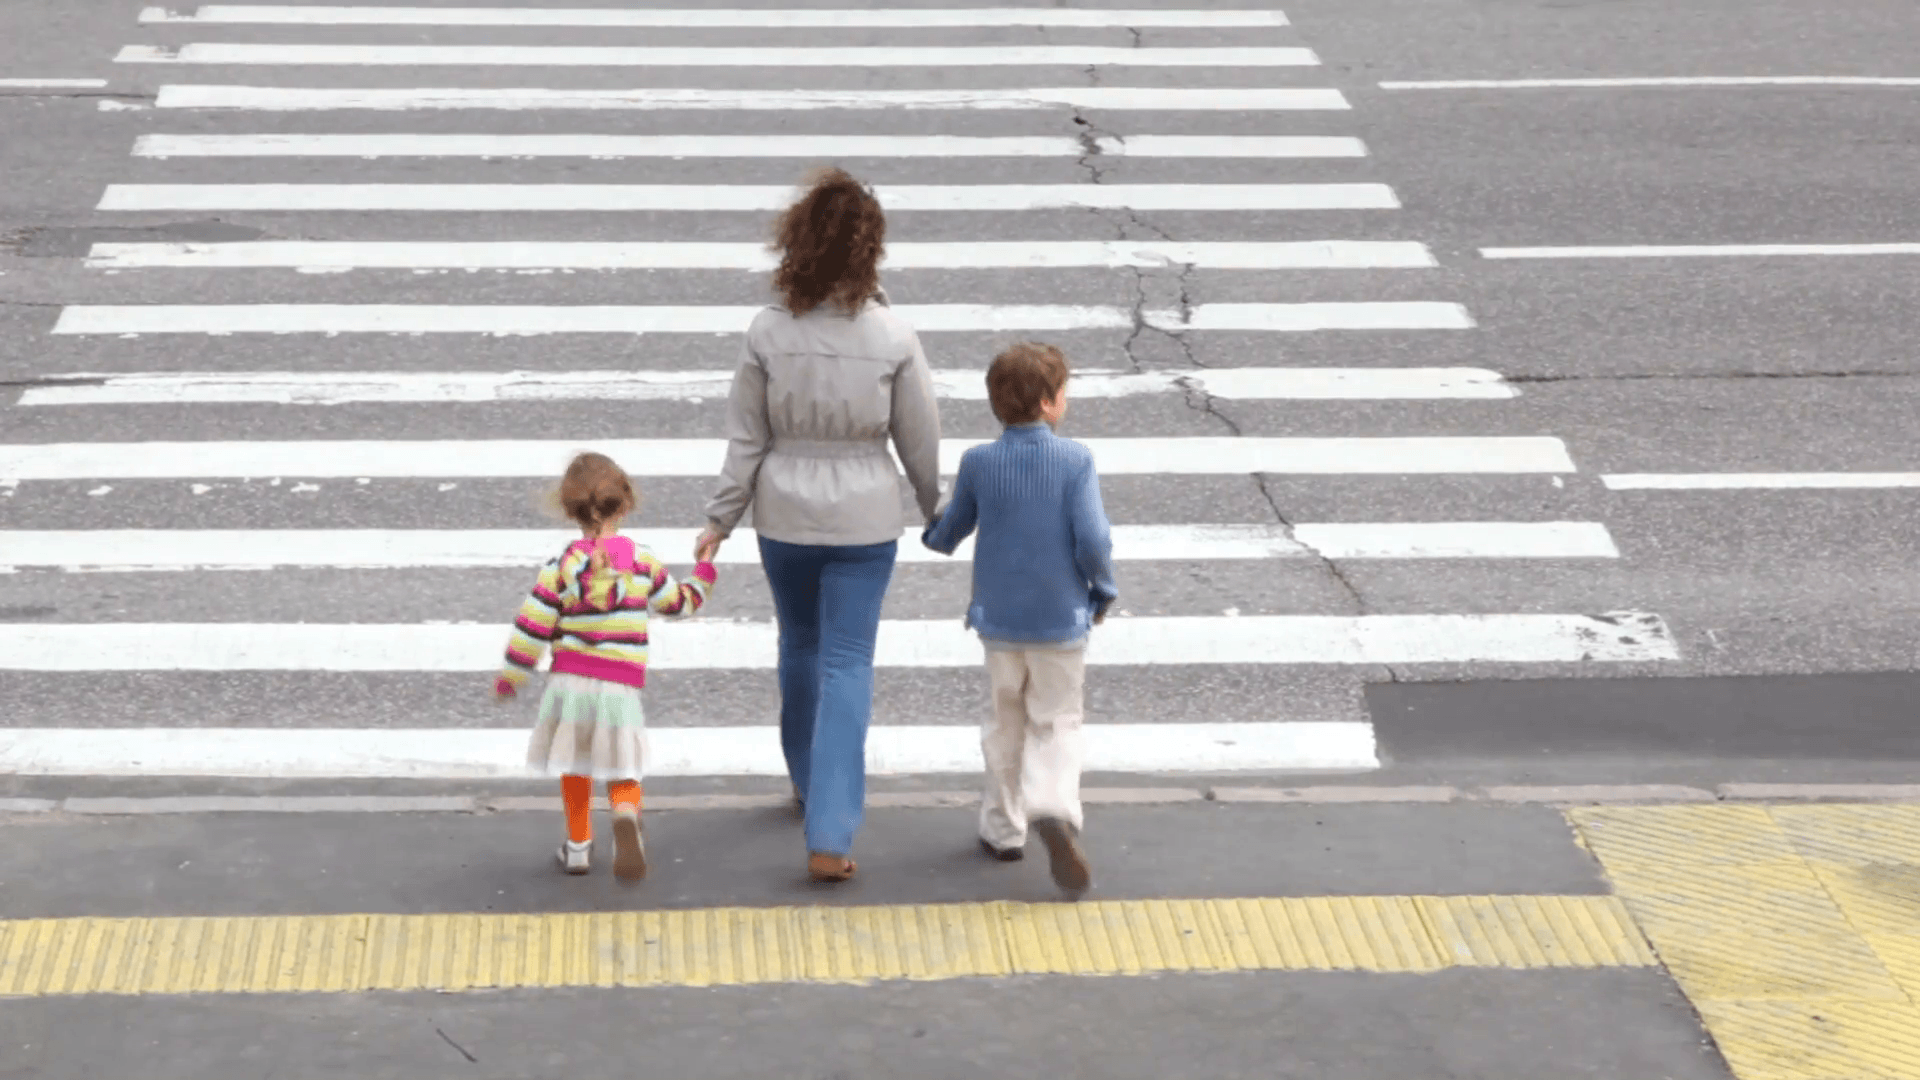 Дети через дорогу. Переход дороги. Пешеход на дороге. Дети переходят дорогу. Пешеходный переход для детей.